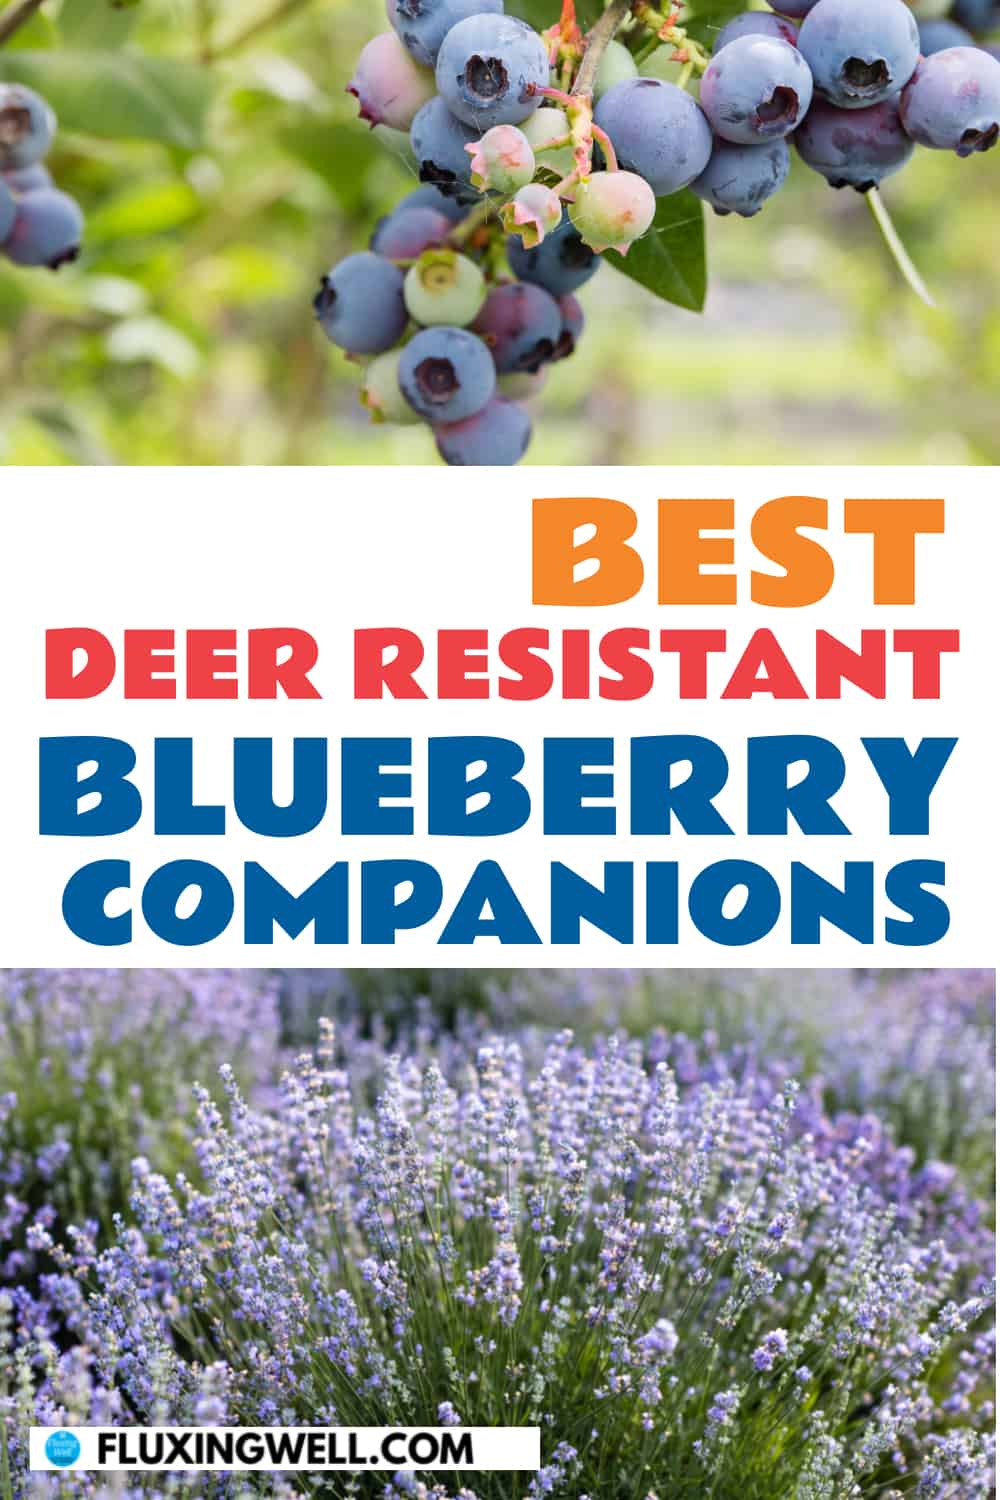 best blueberry deer resistant companions